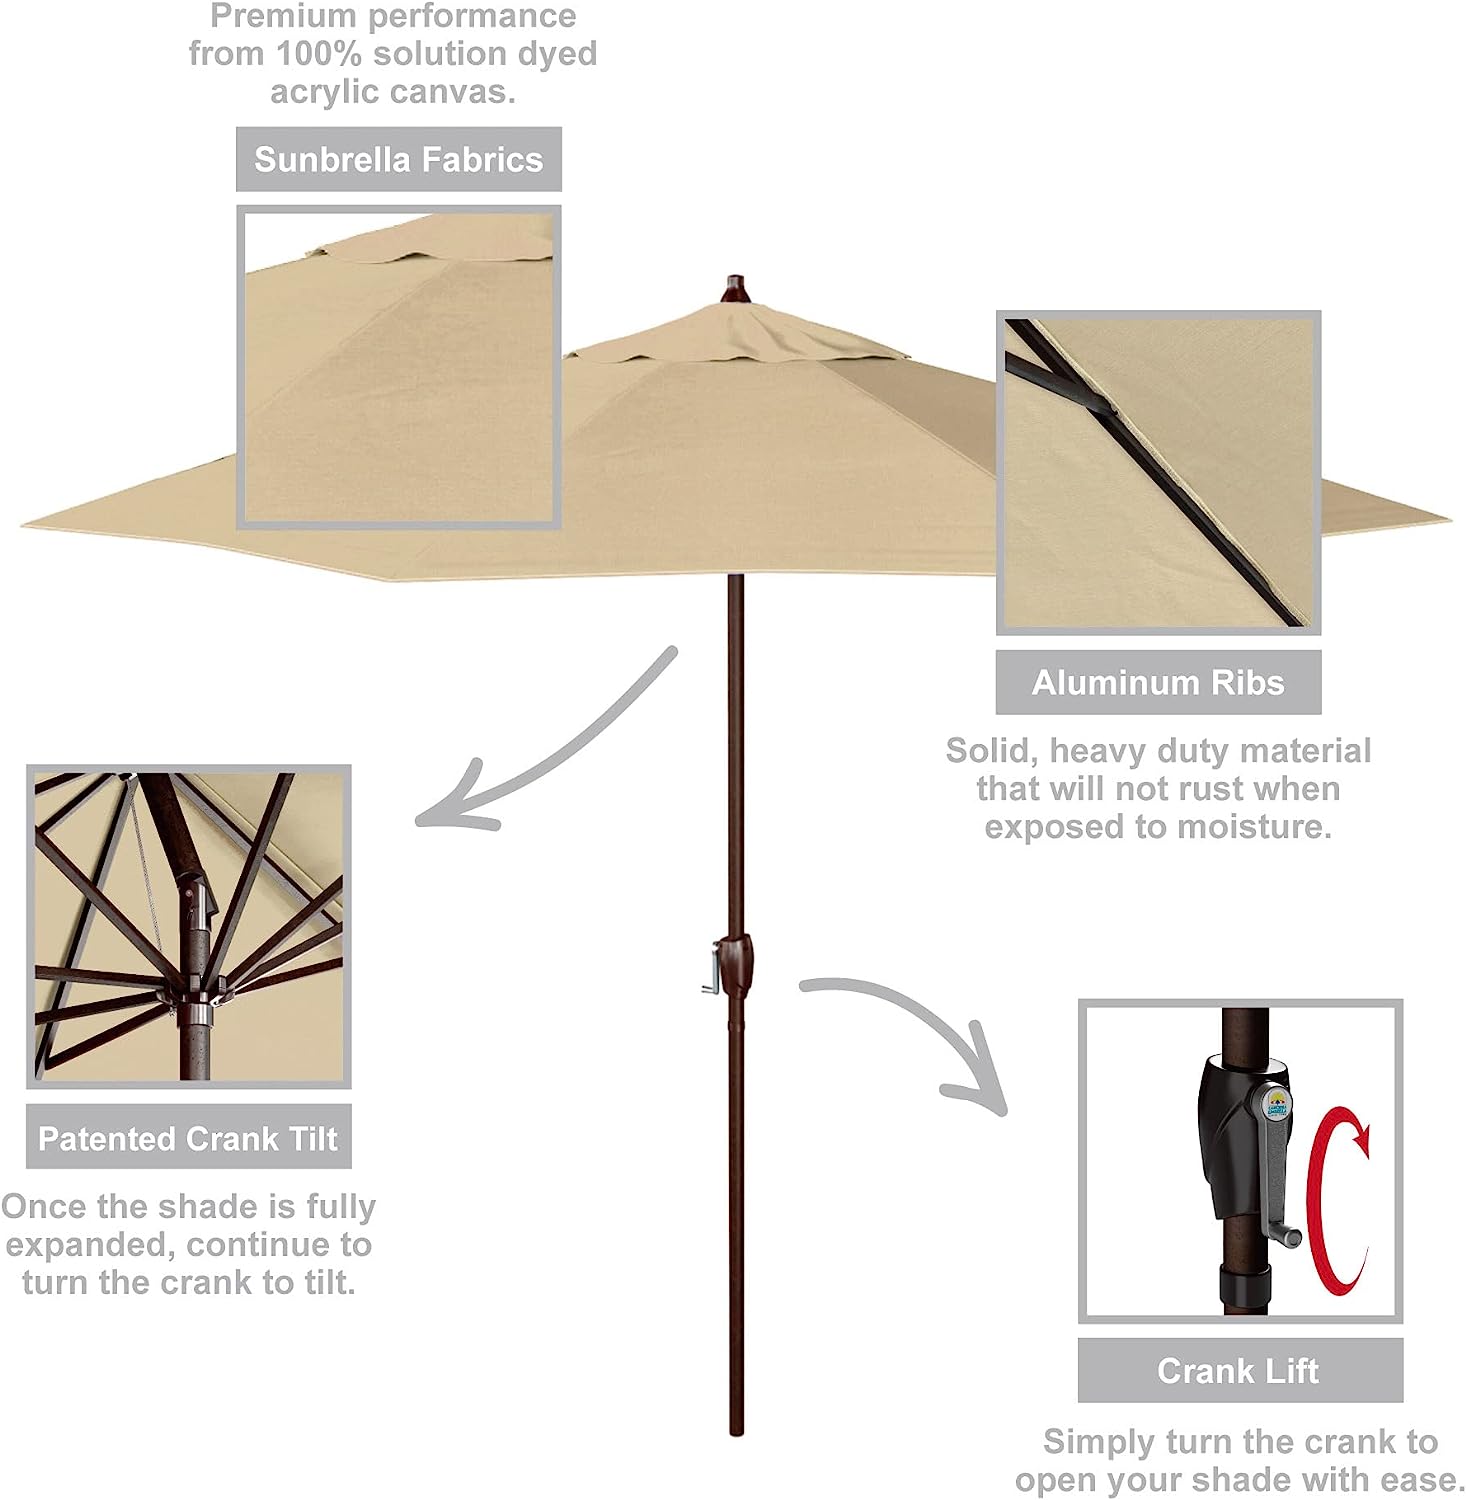 California Umbrella 9 ft. Champange Auto Tilt Crank Lift, Antique Beige Sunbrella - $120